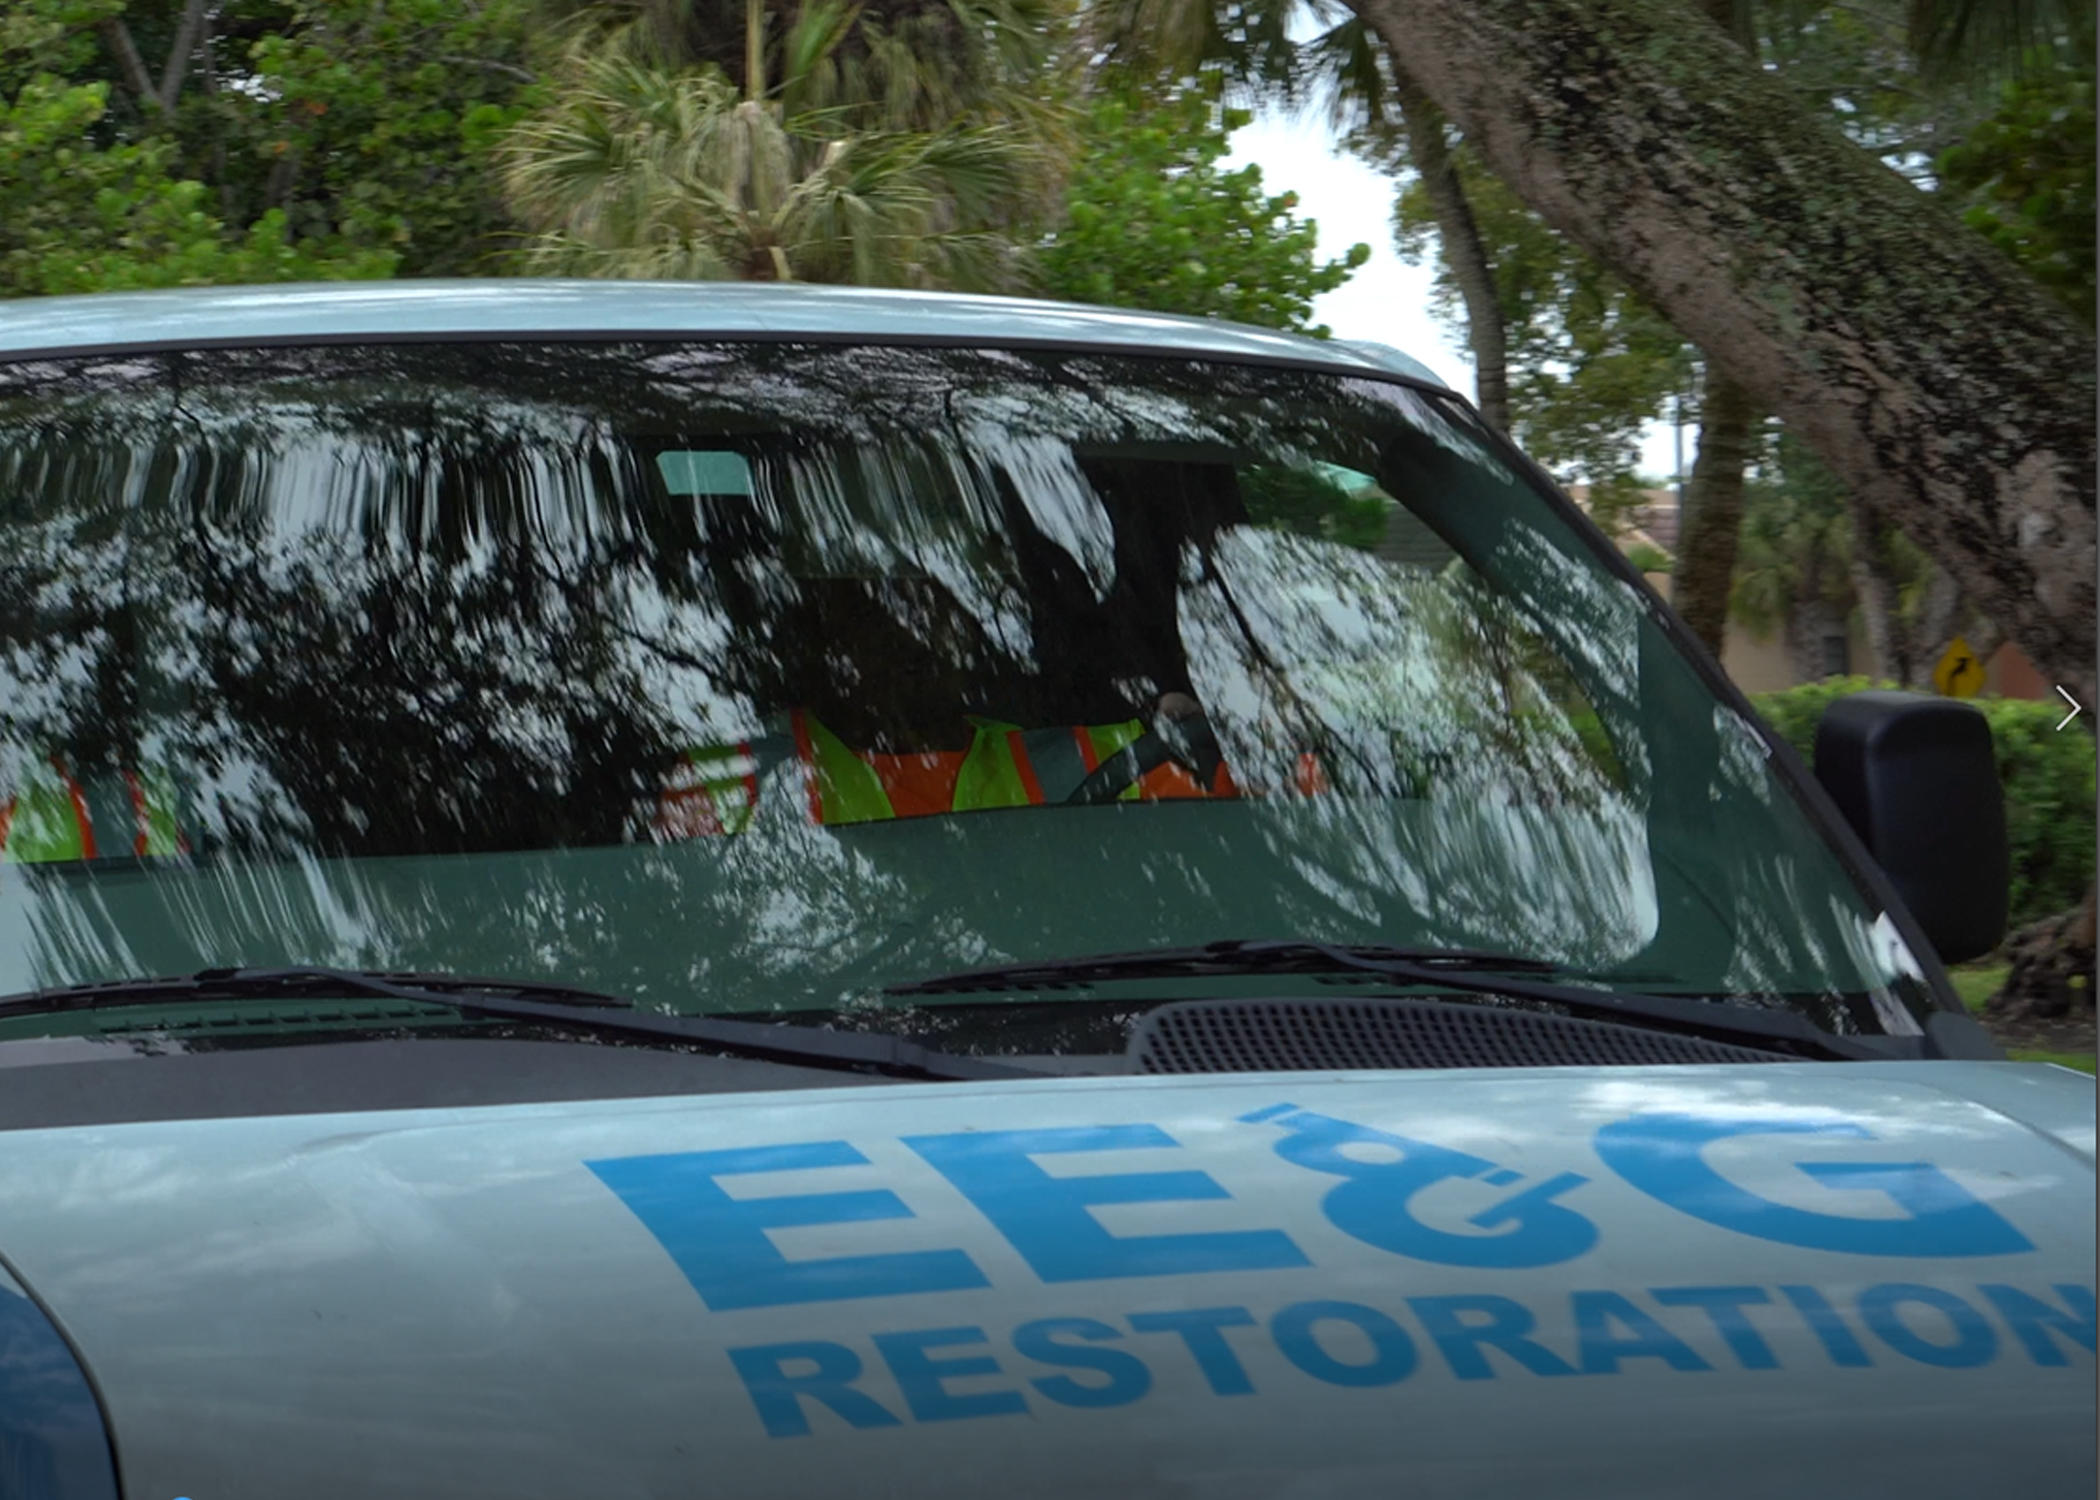 EE&G Restoration Orlando Water Damage, Fire Damage, Mold Remediation & Removal Photo